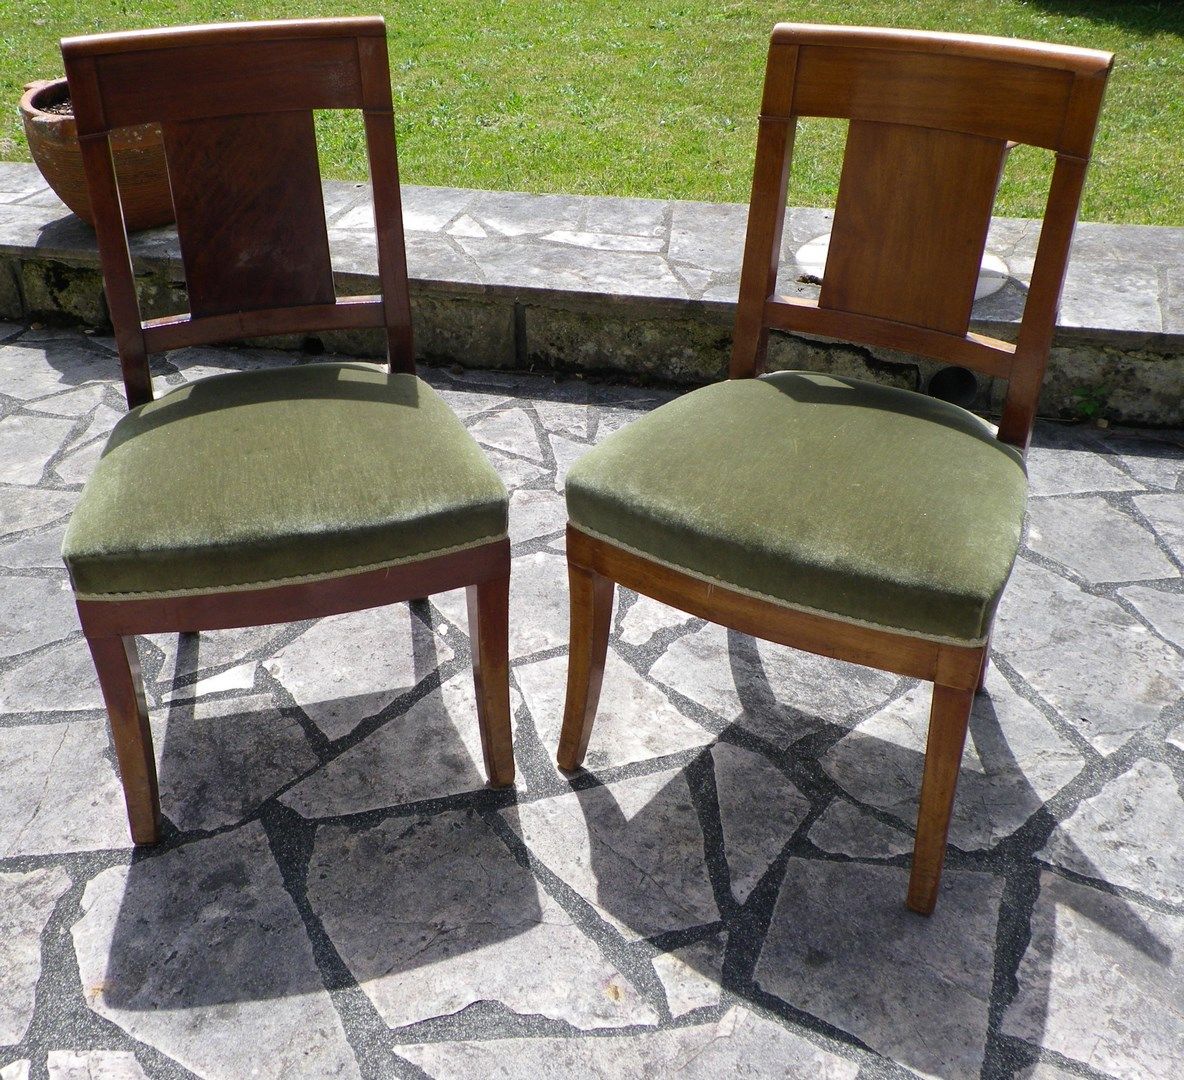 Null 由十张桃花心木和桃花心木饰面的椅子组成的套房，用绿色天鹅绒装饰。

高度：89厘米 - 座椅高度：46厘米

状况良好。